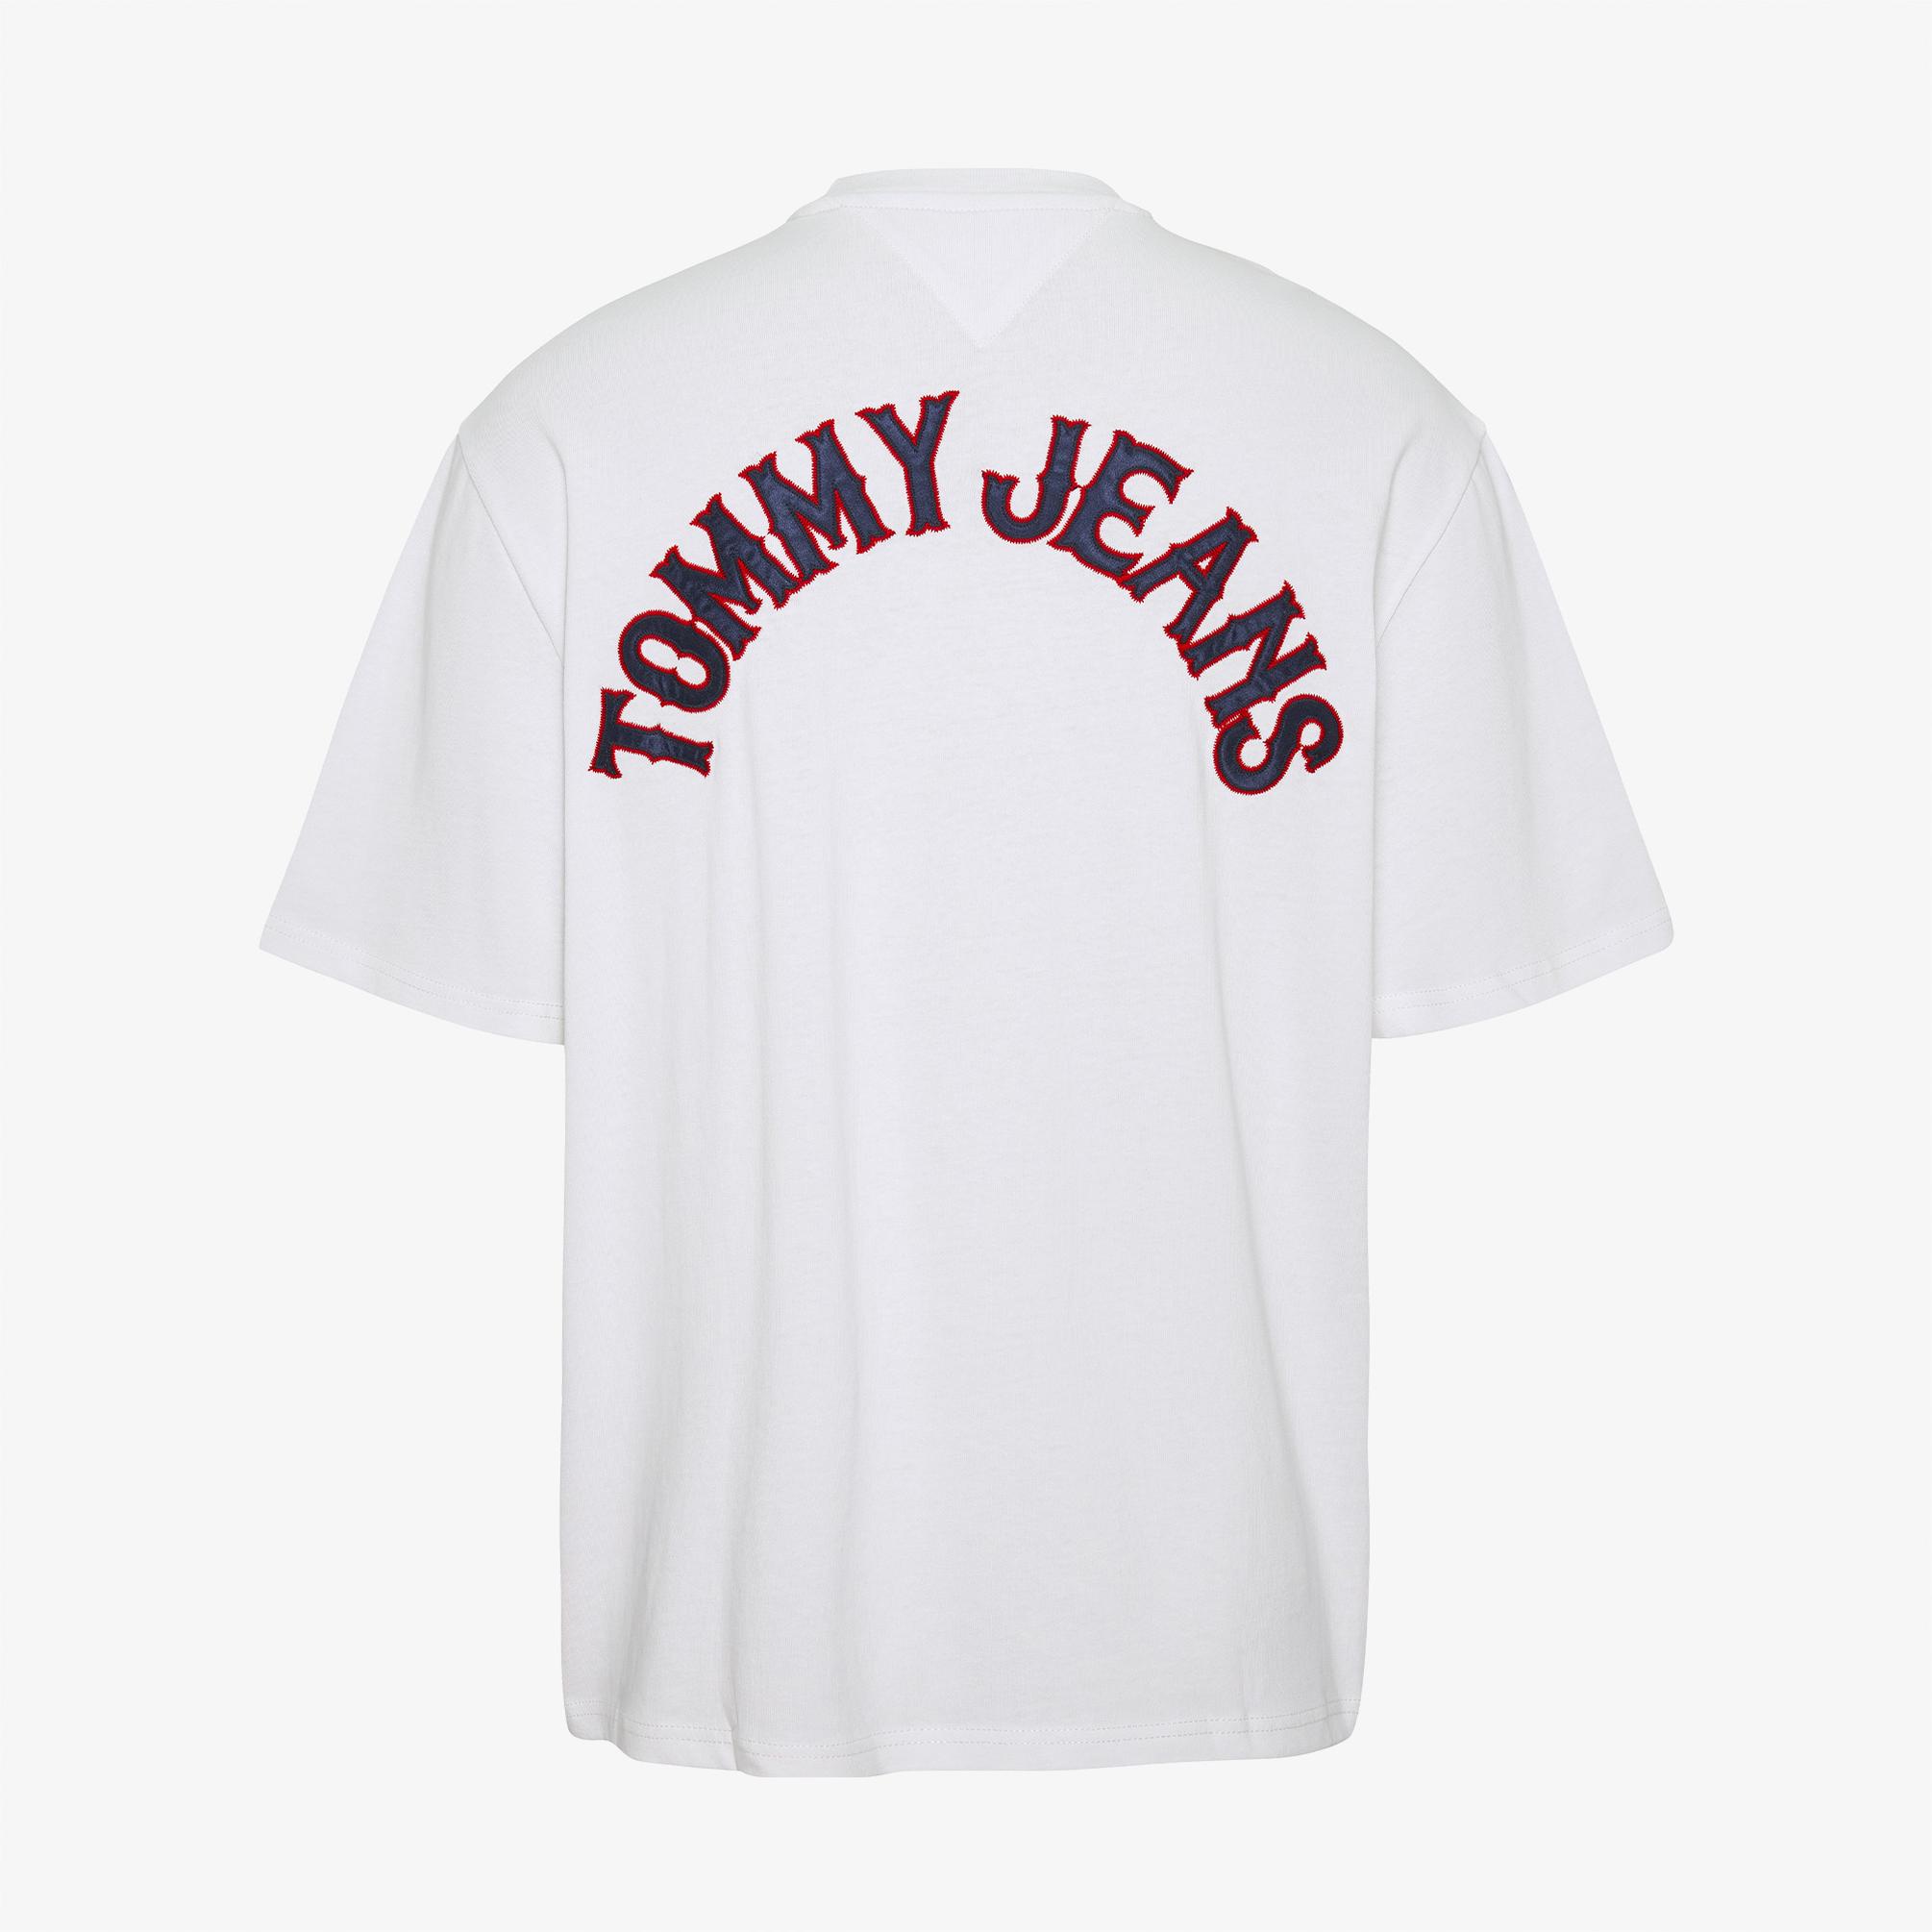  Tommy Jeans Skate Modern 2 Erkek Beyaz T-shirt